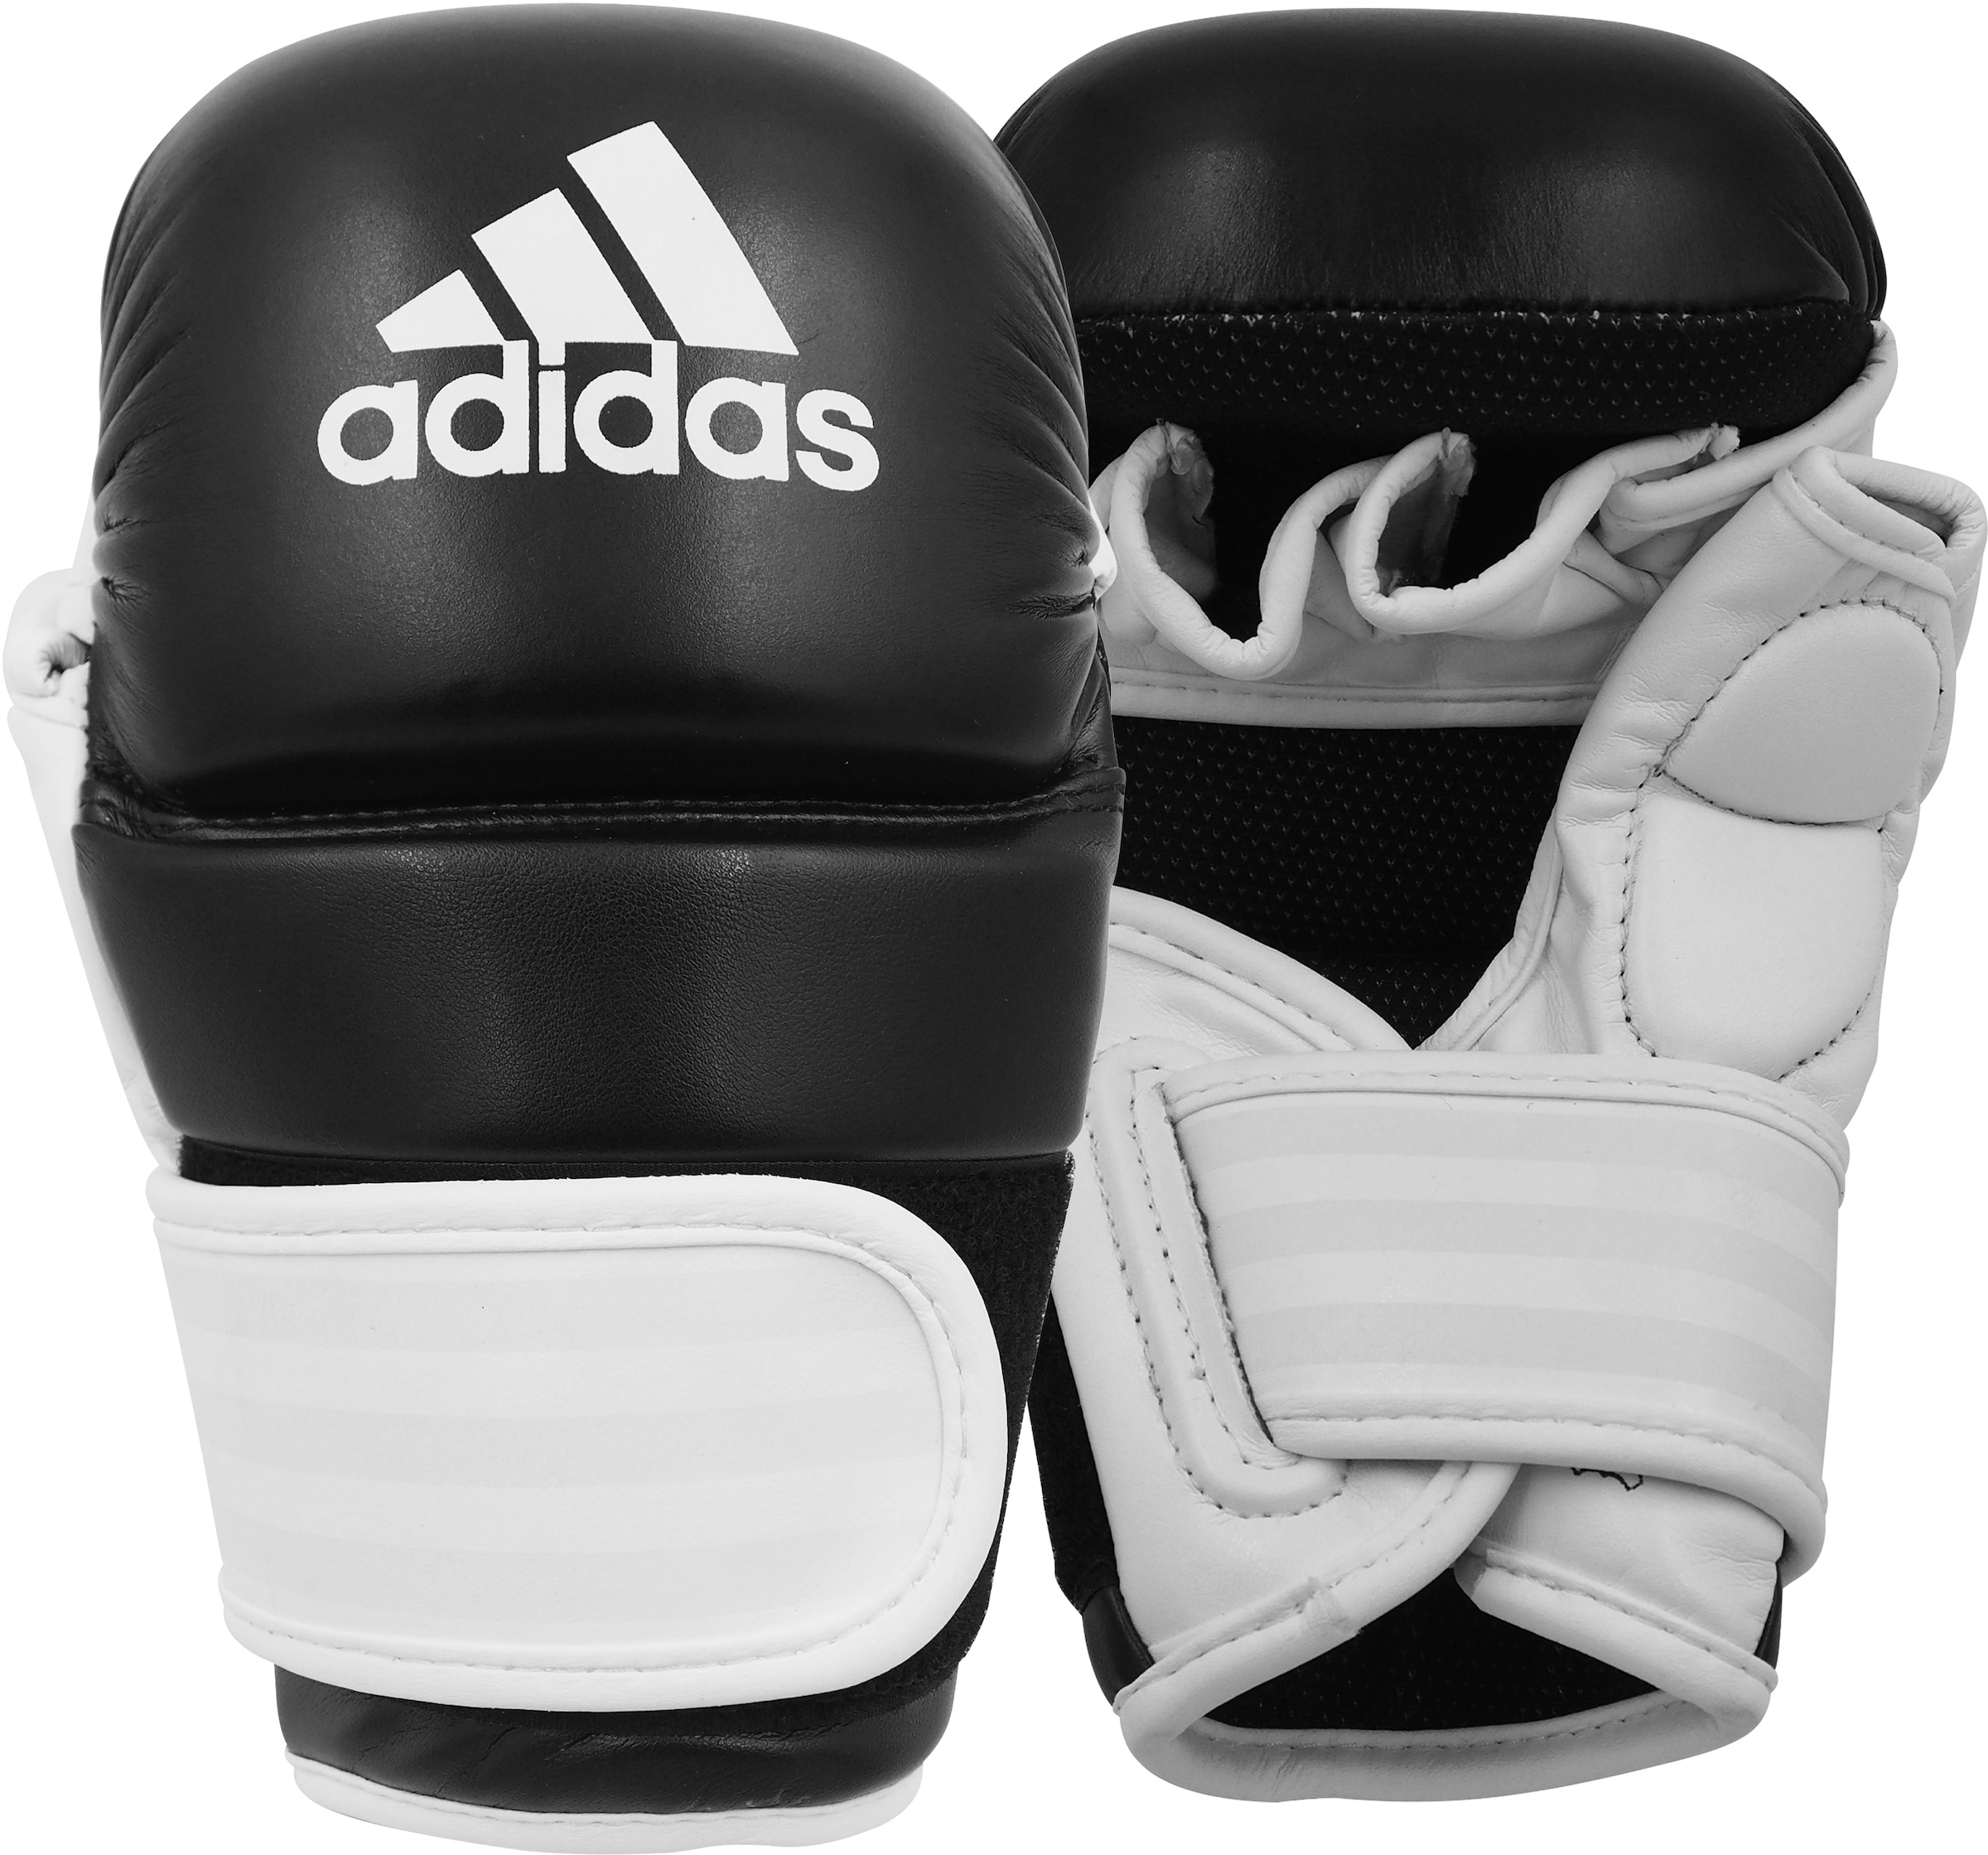 adidas Performance Cloves« Rechnung | MMA-Handschuhe Grappling BAUR auf »Training bestellen